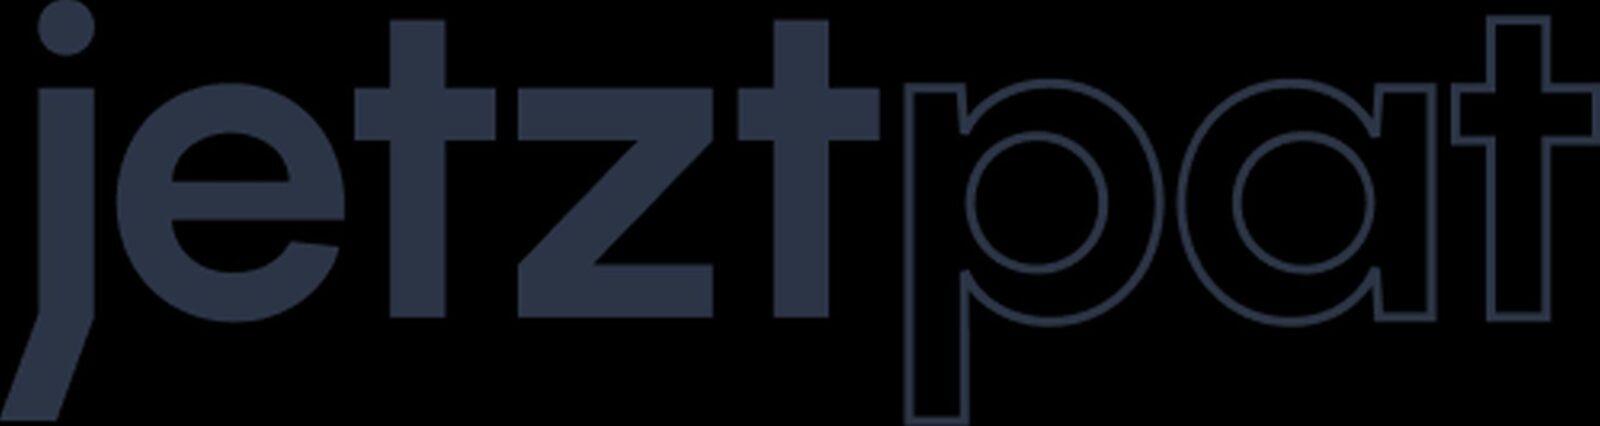 Jetztpat GmbH